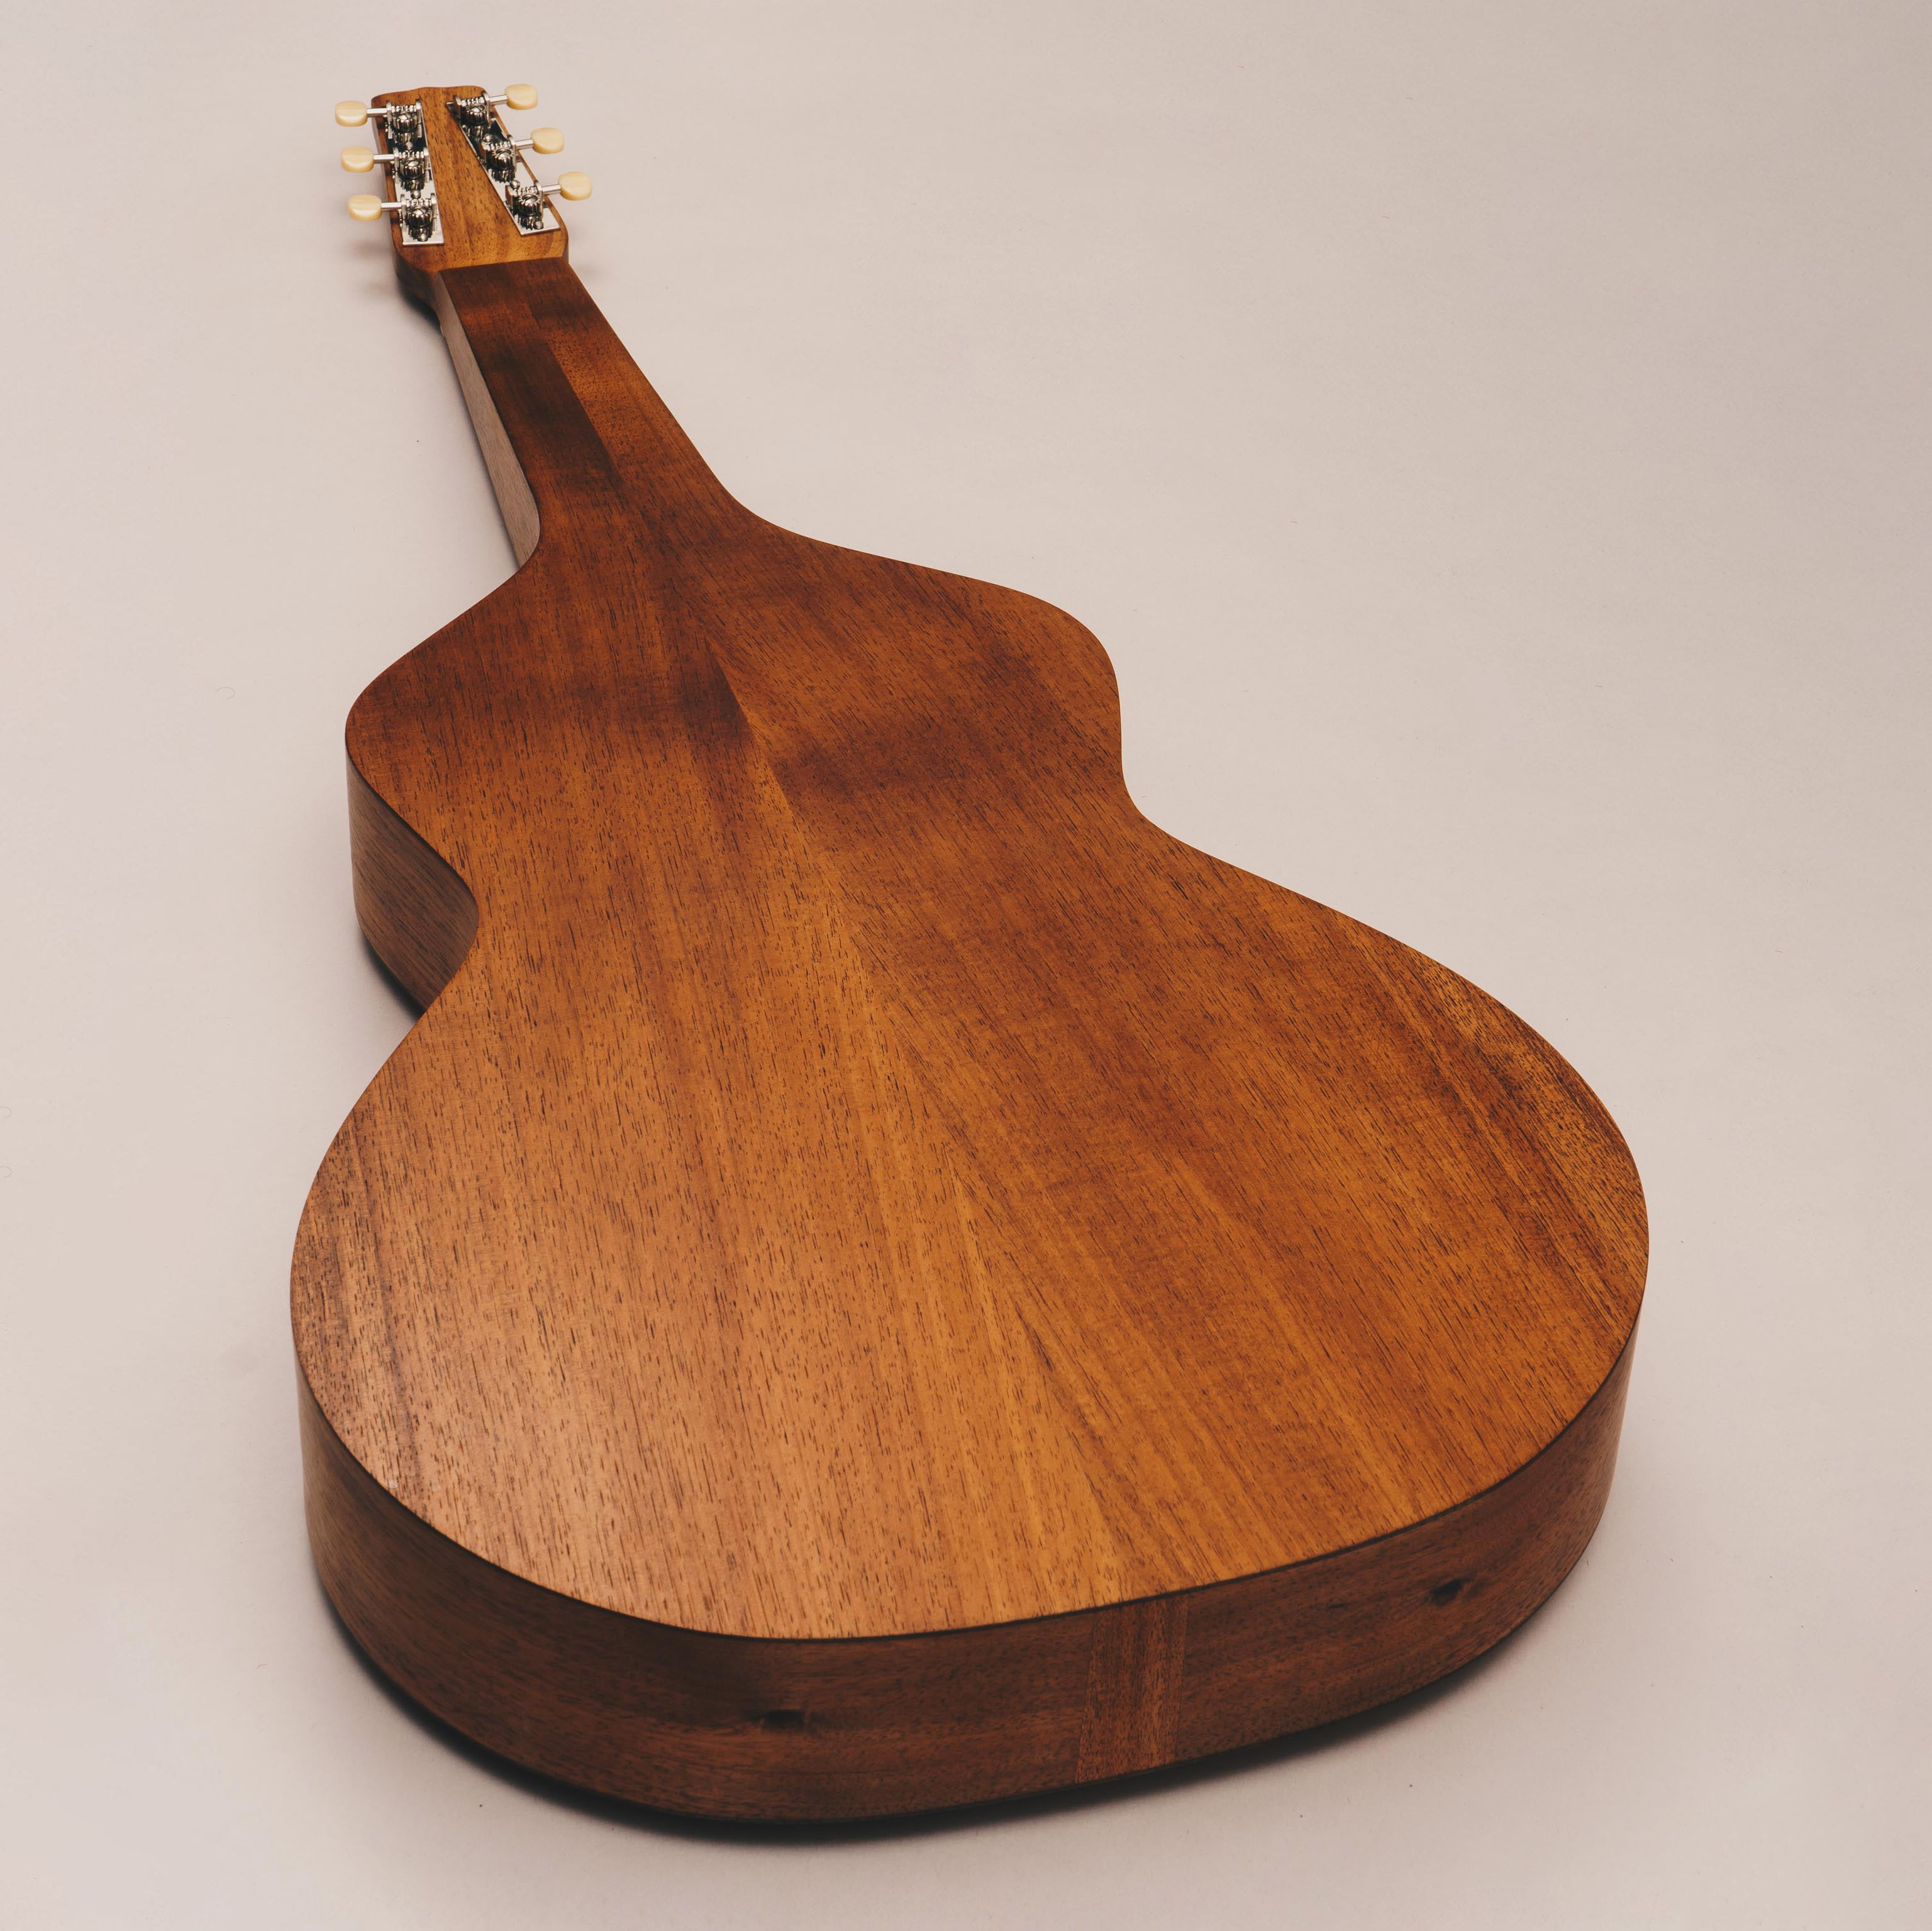 Style 1 Weissenborn Guitar Weissenborn Acoustic Lap Steel Slide Guitar by master luthier Richard Wilson. Handcrafted in Australia. Serial no. RW2320-410.